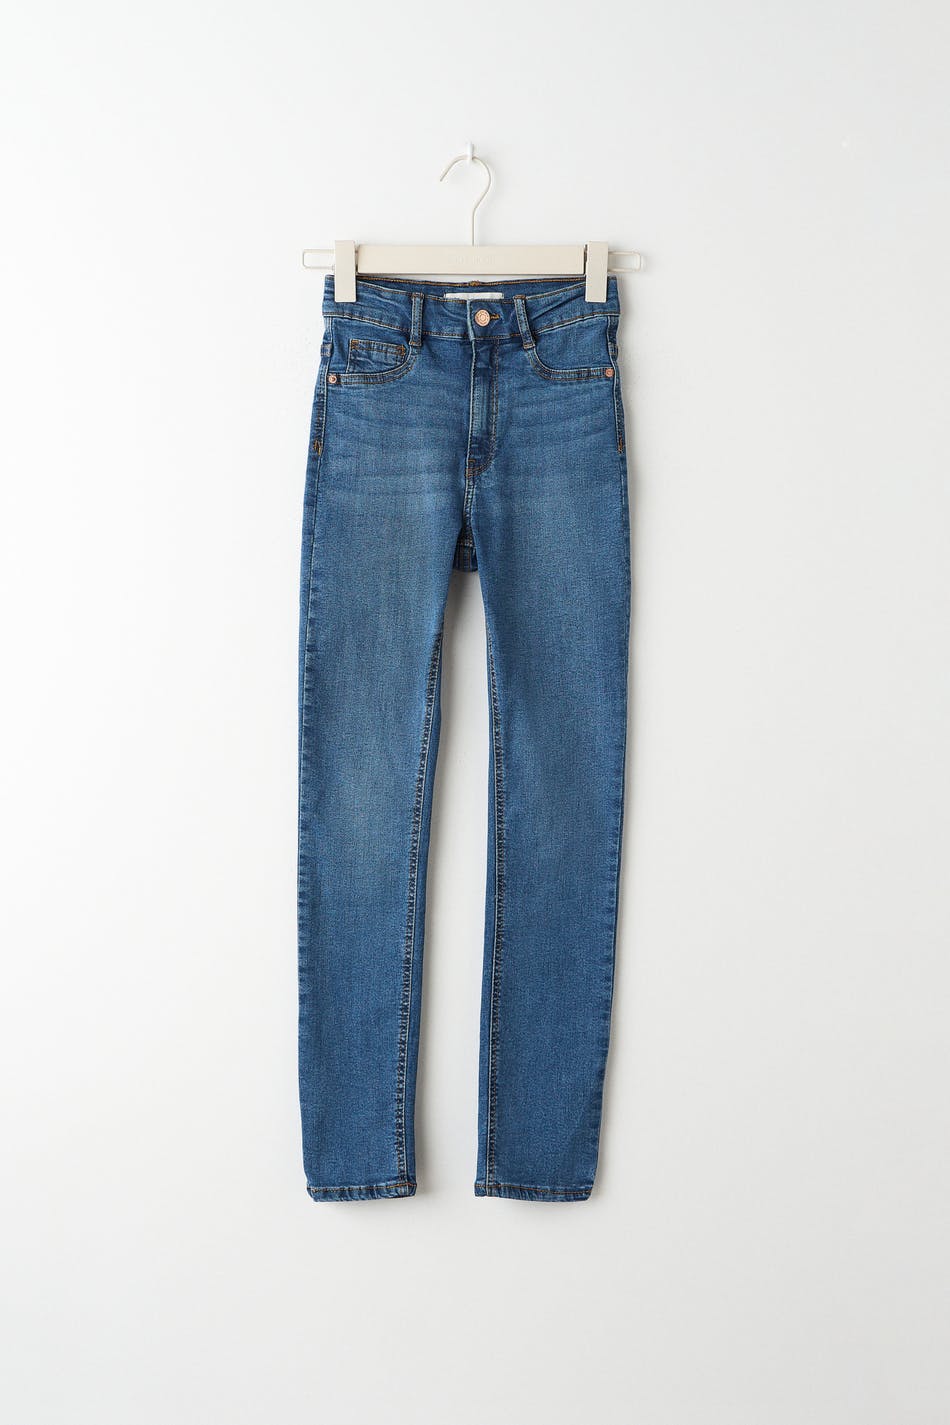 Gina Tricot Molly PETITE high w jeans XXS  Standard blue (5048)